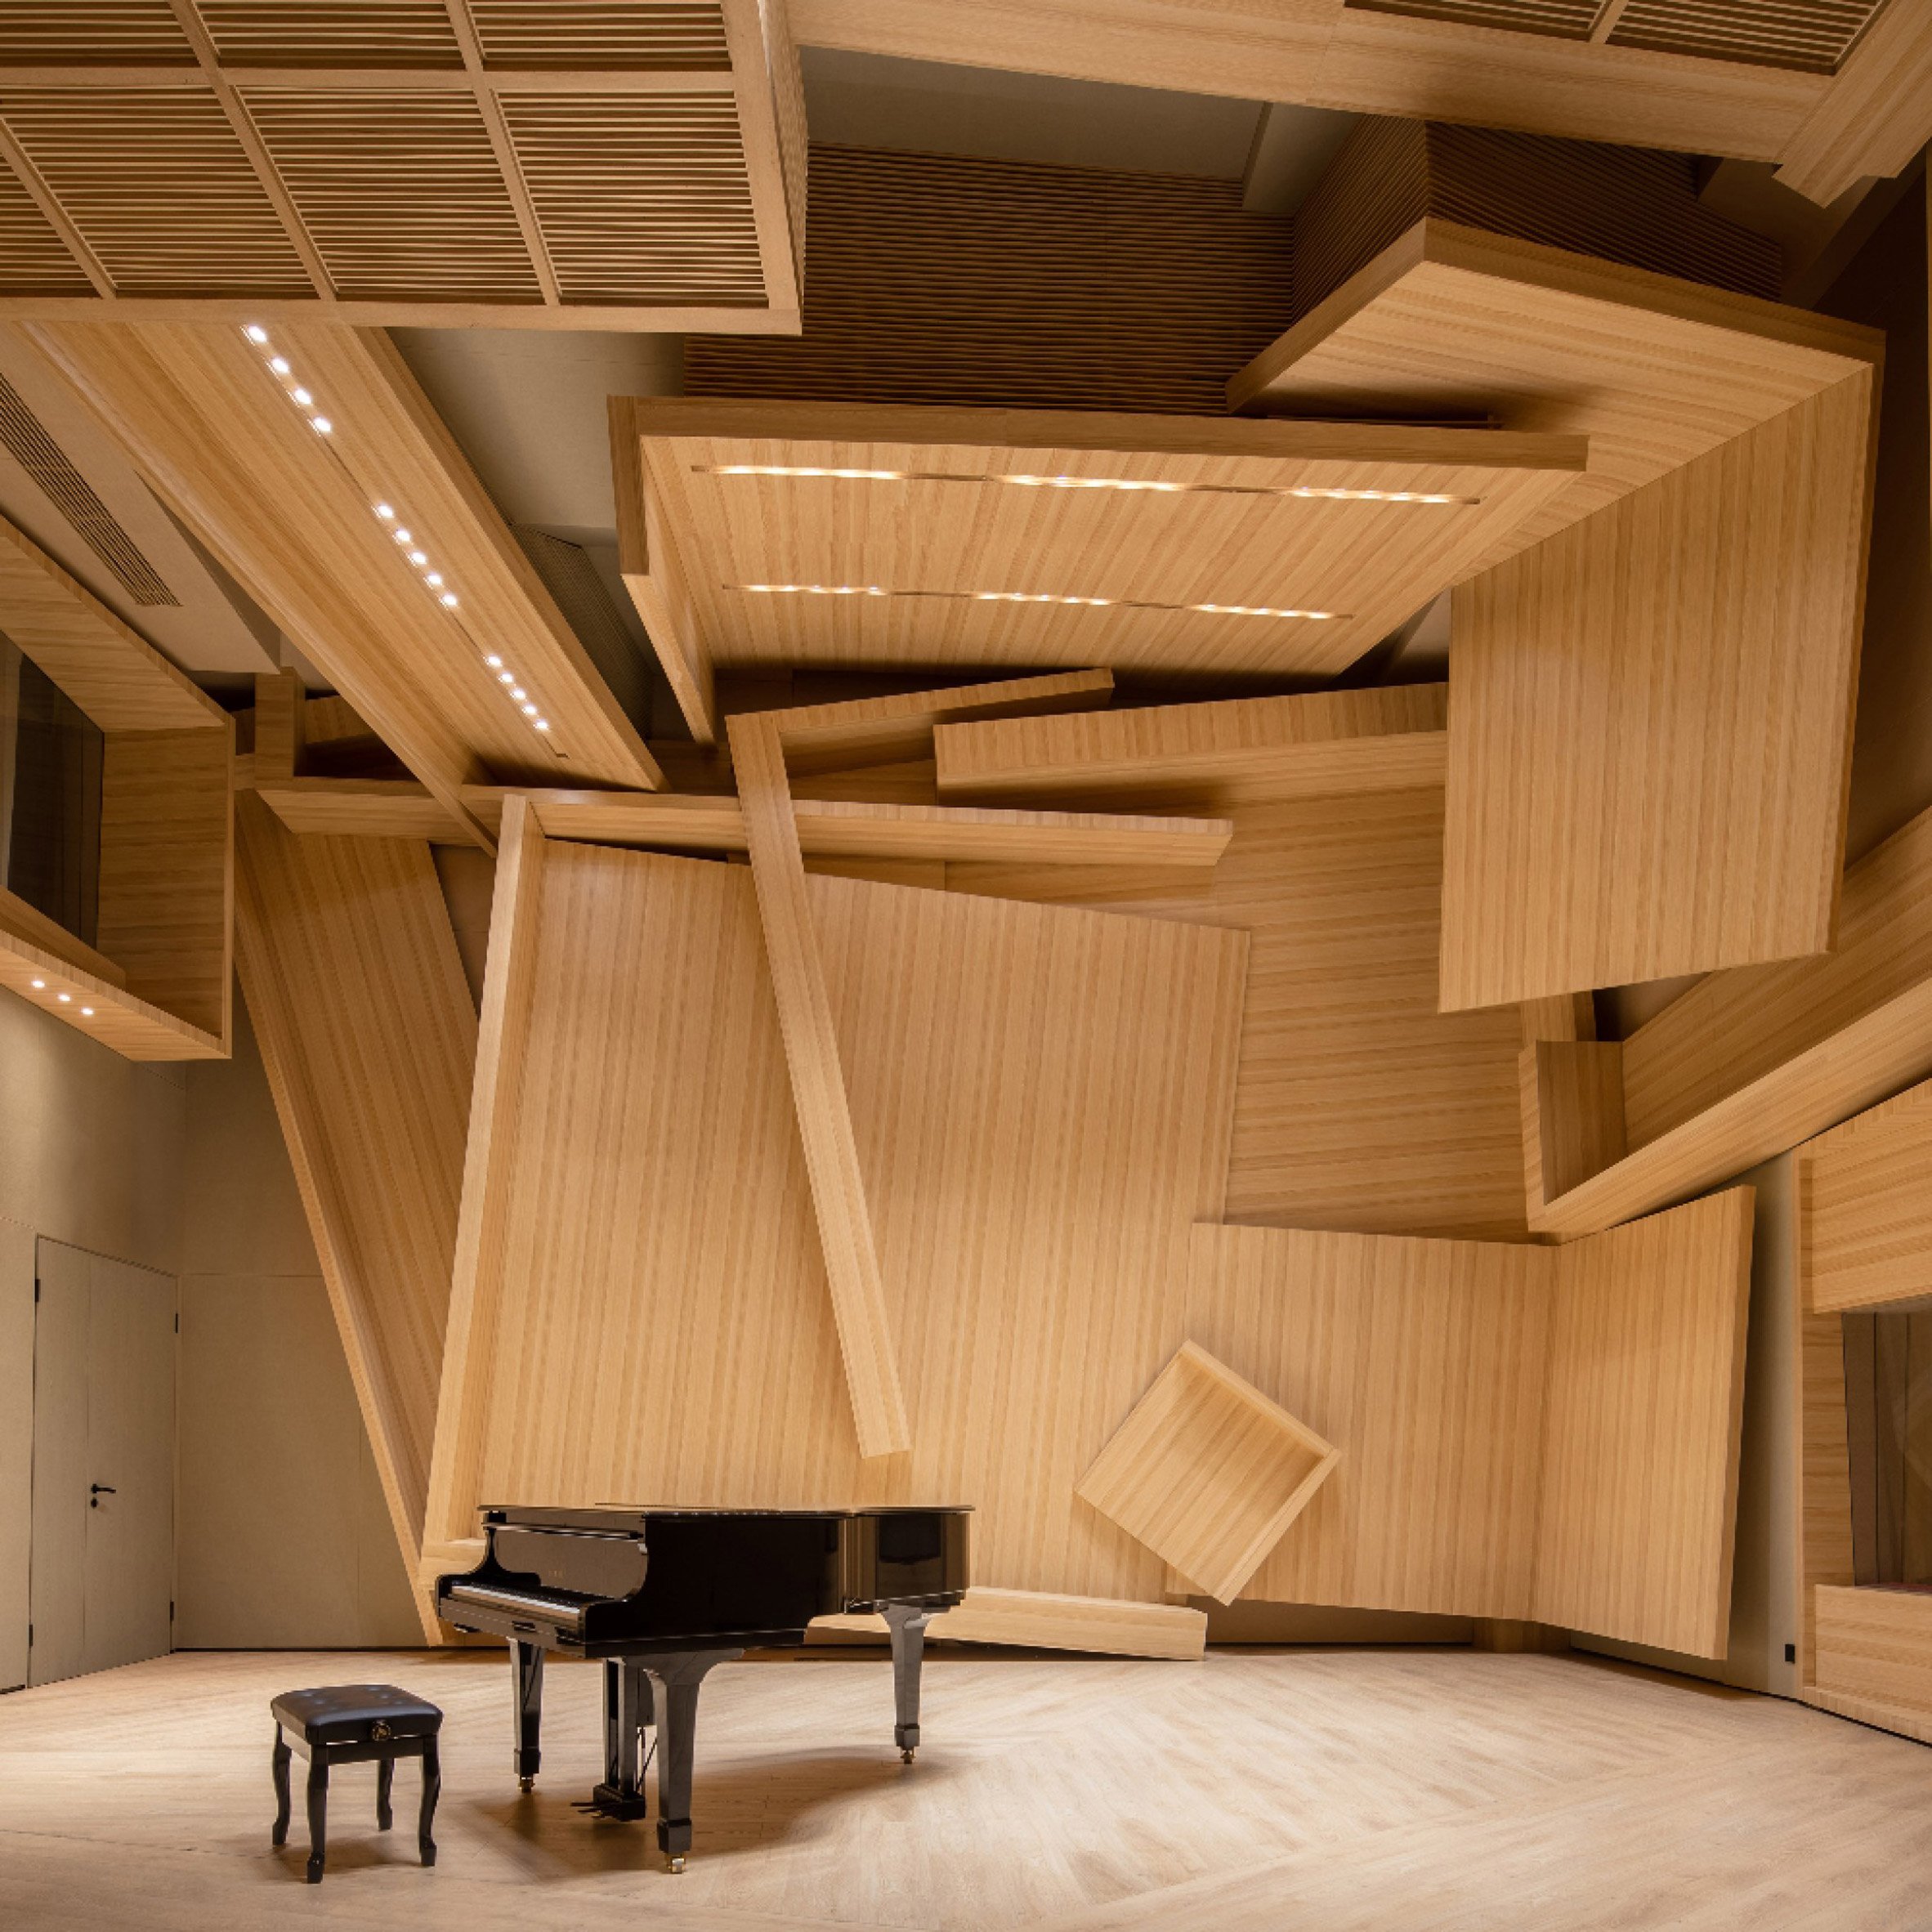 A black piano inside a wooden music studio